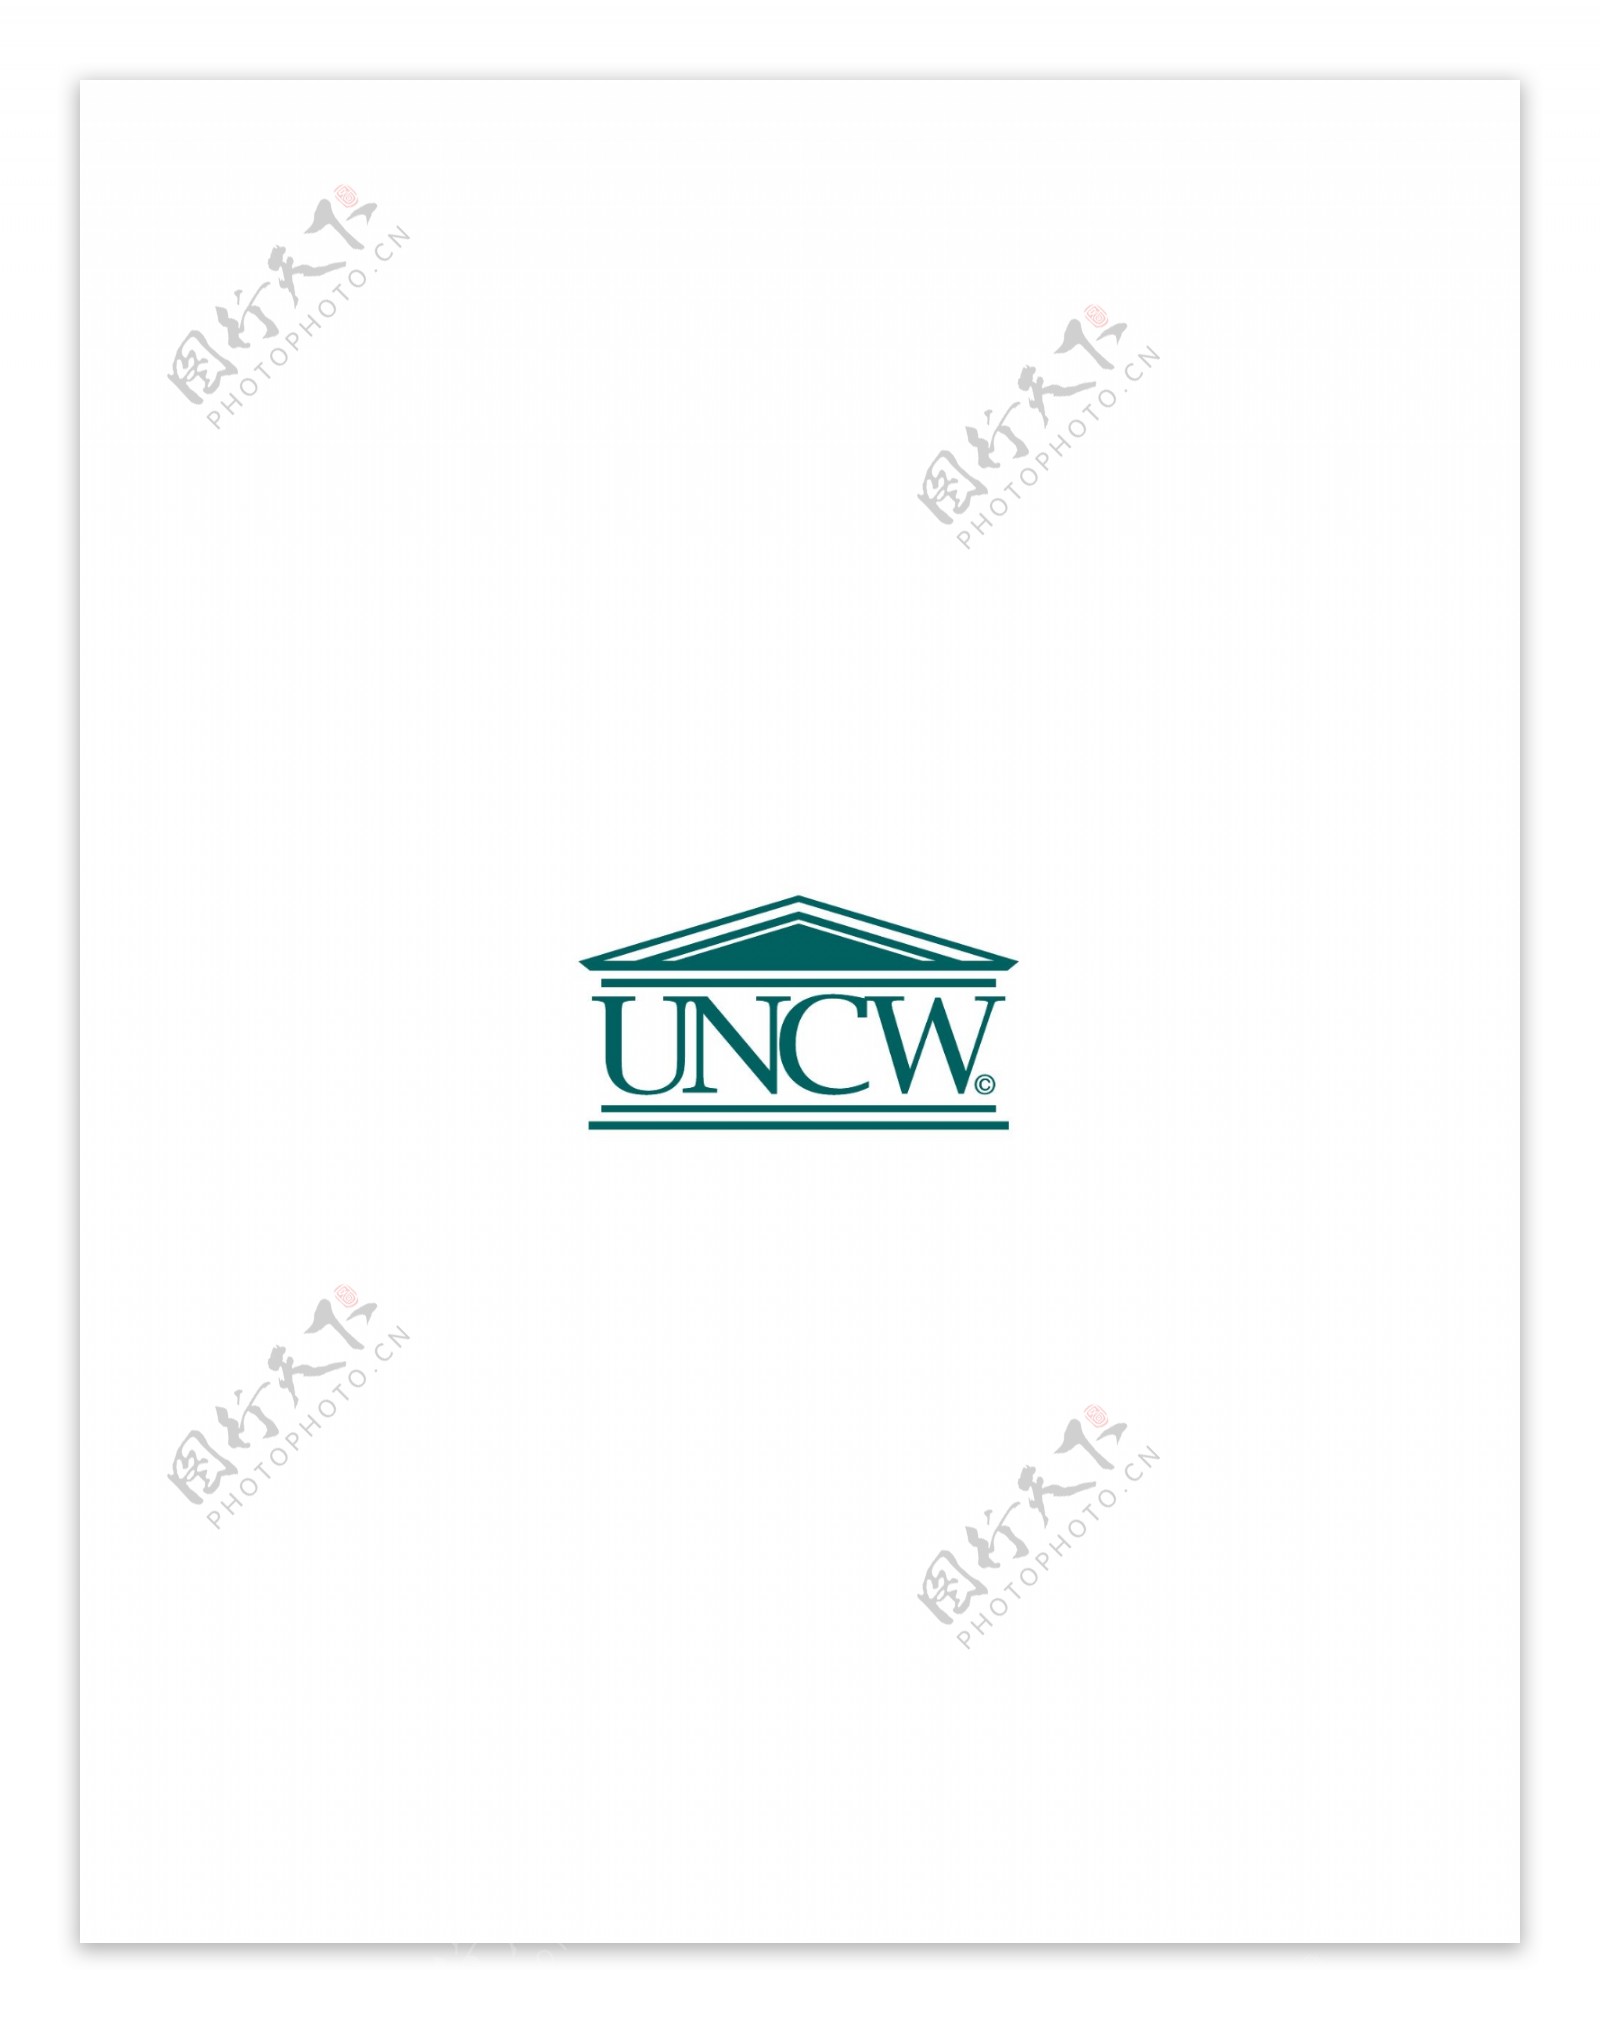 UNCWlogo设计欣赏足球和娱乐相关标志UNCW下载标志设计欣赏